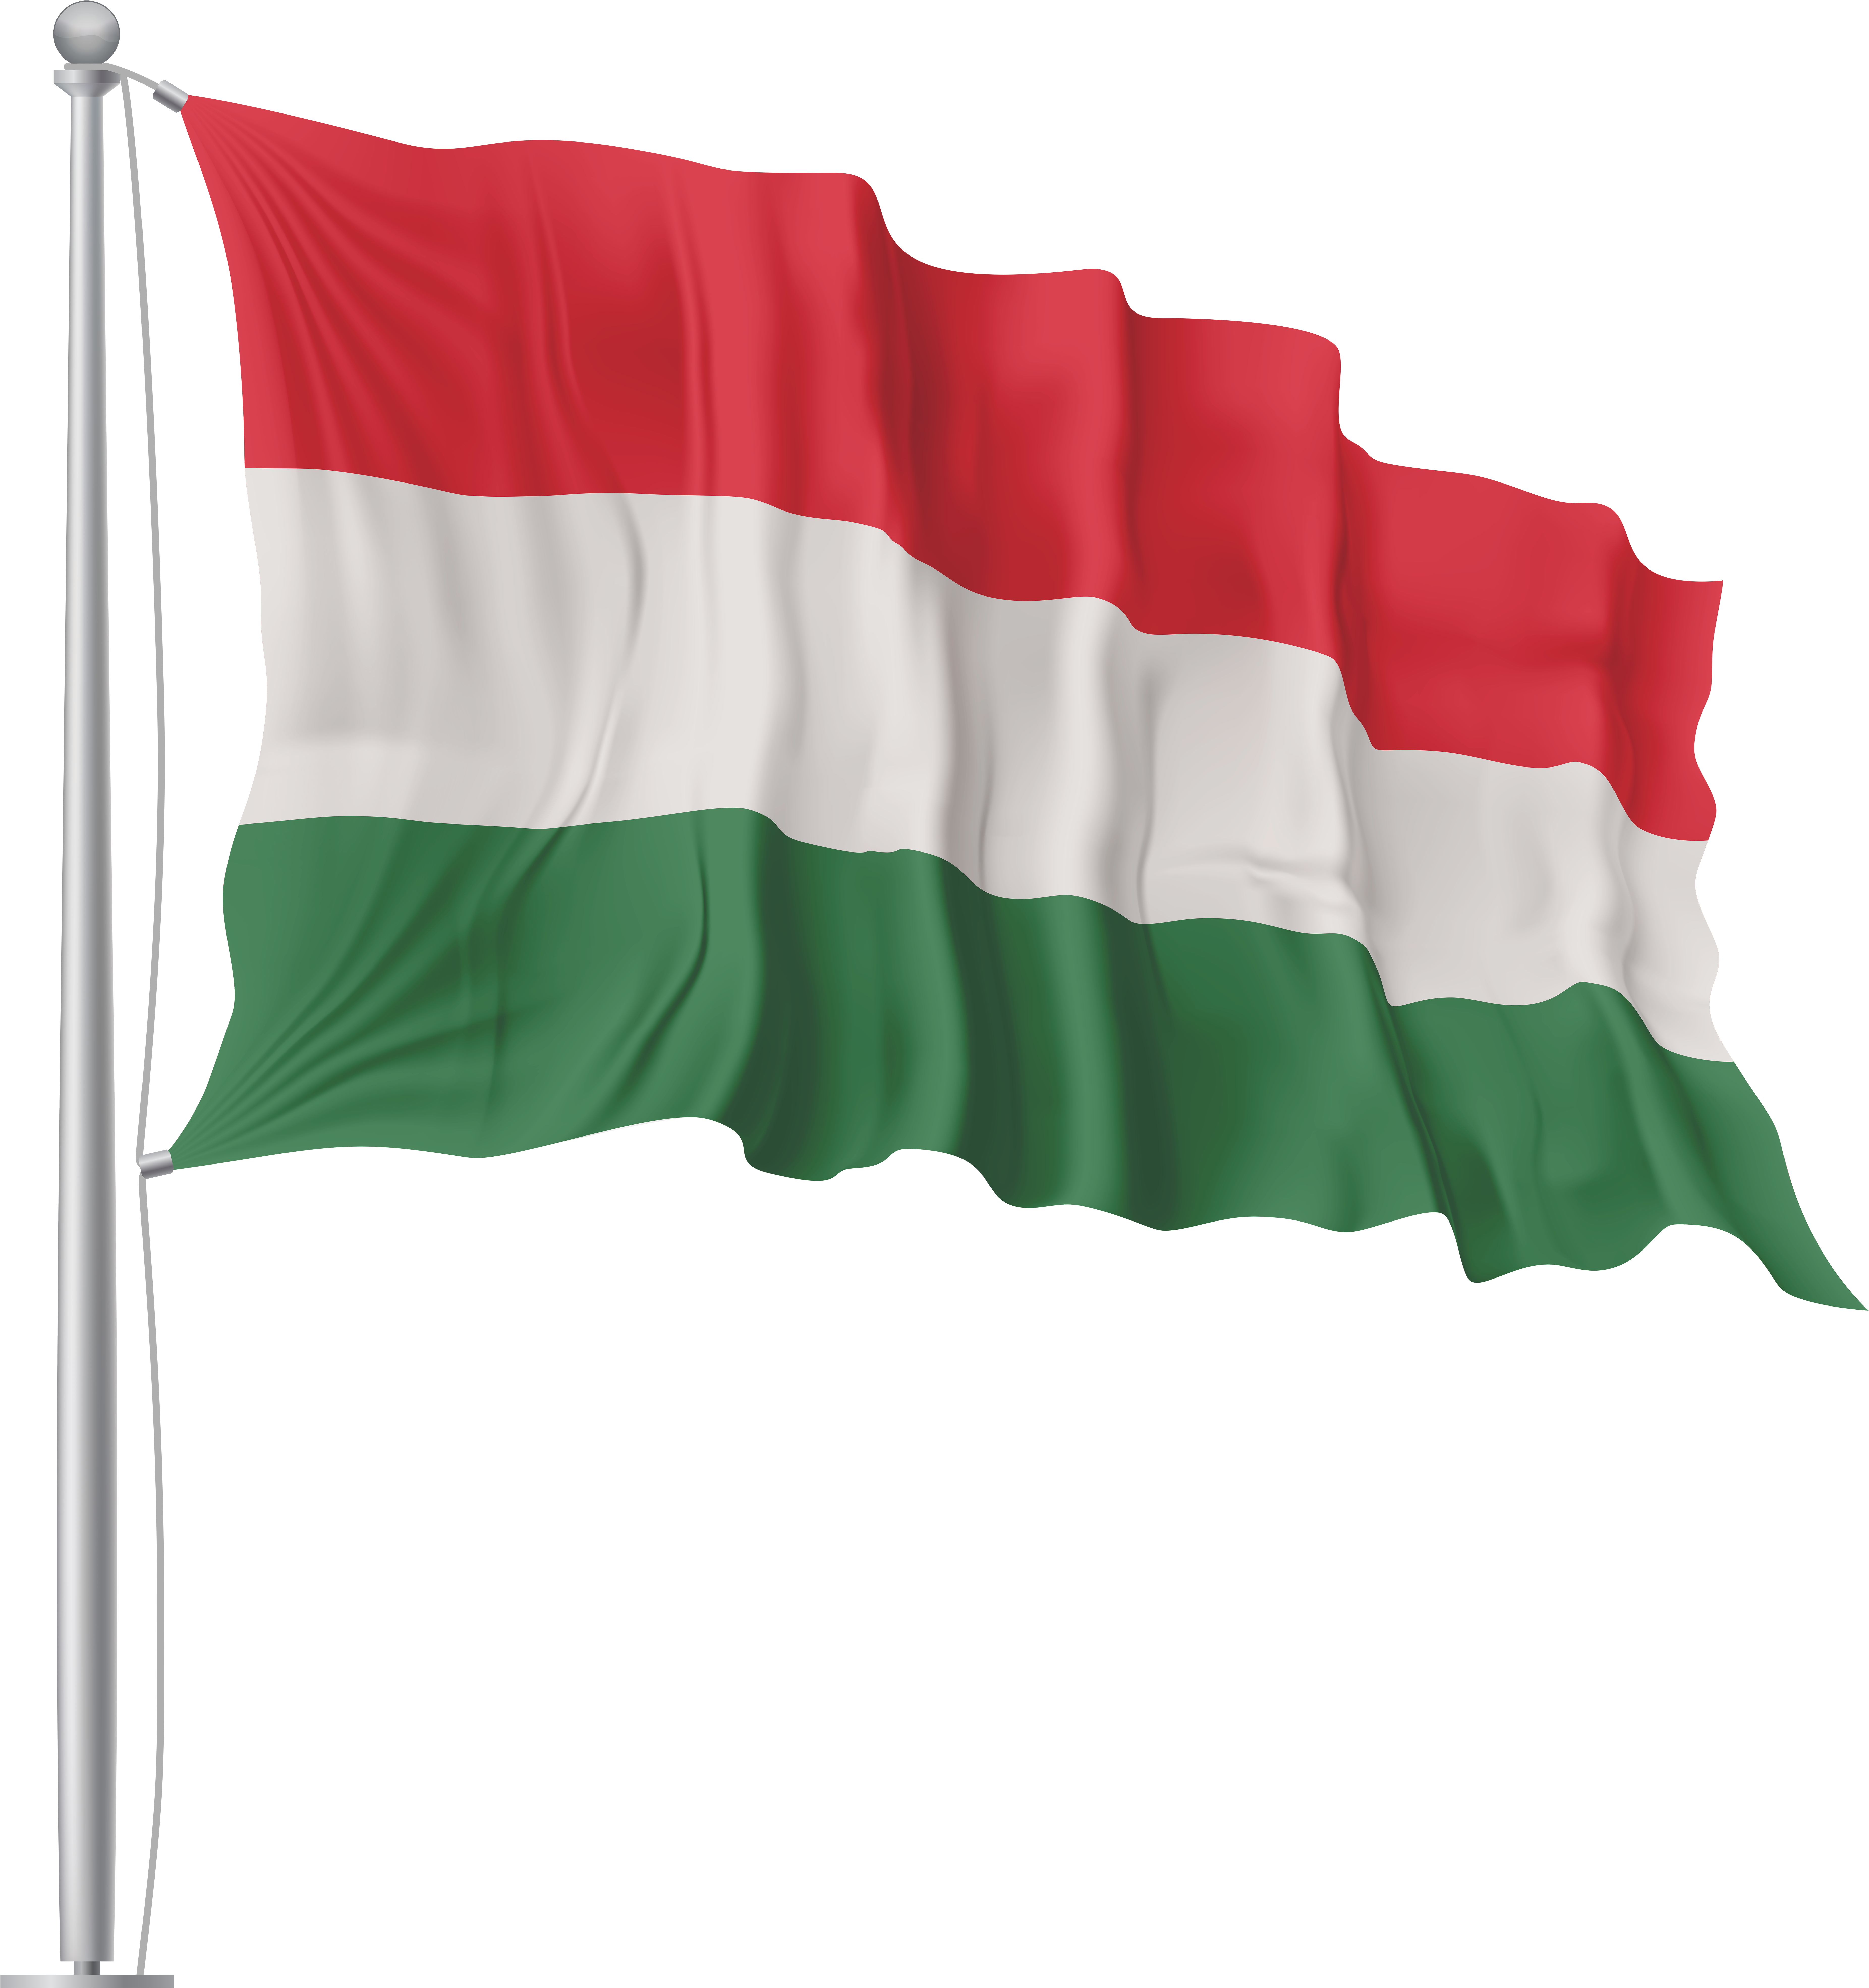 Hungarian National Flag Waving PNG image